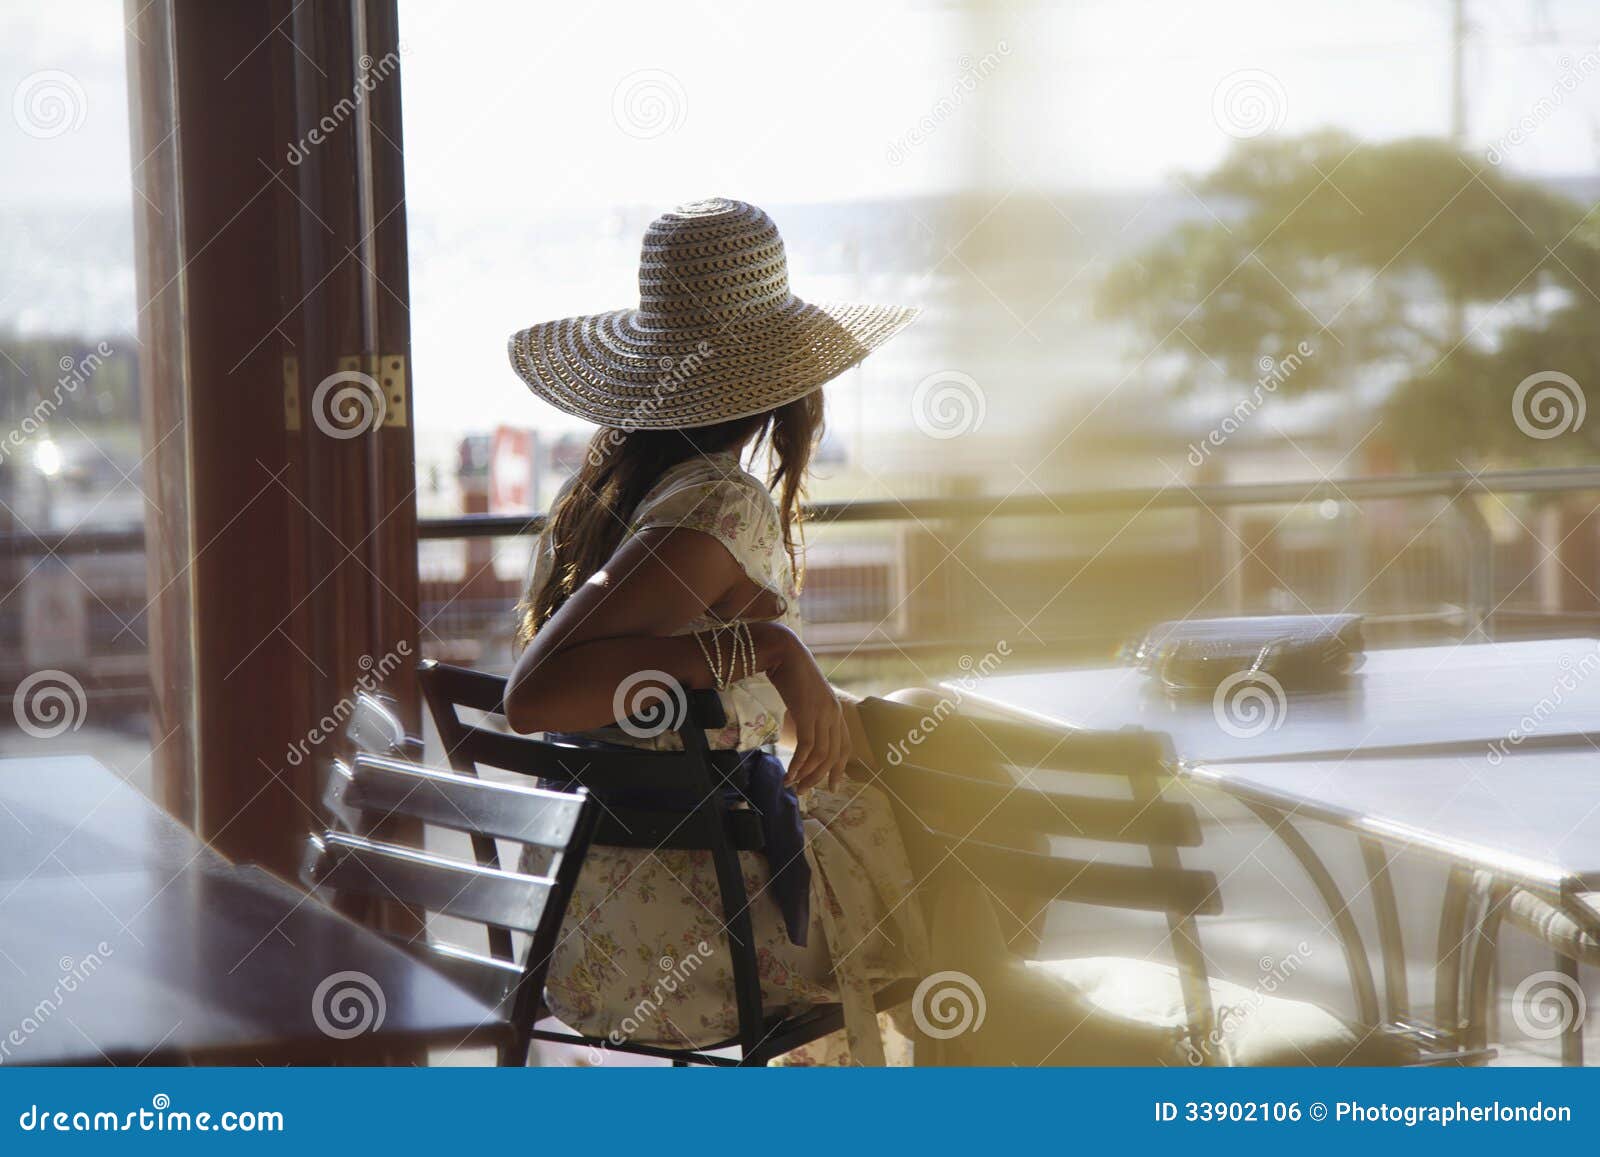 woman wearing sunhat at cafe